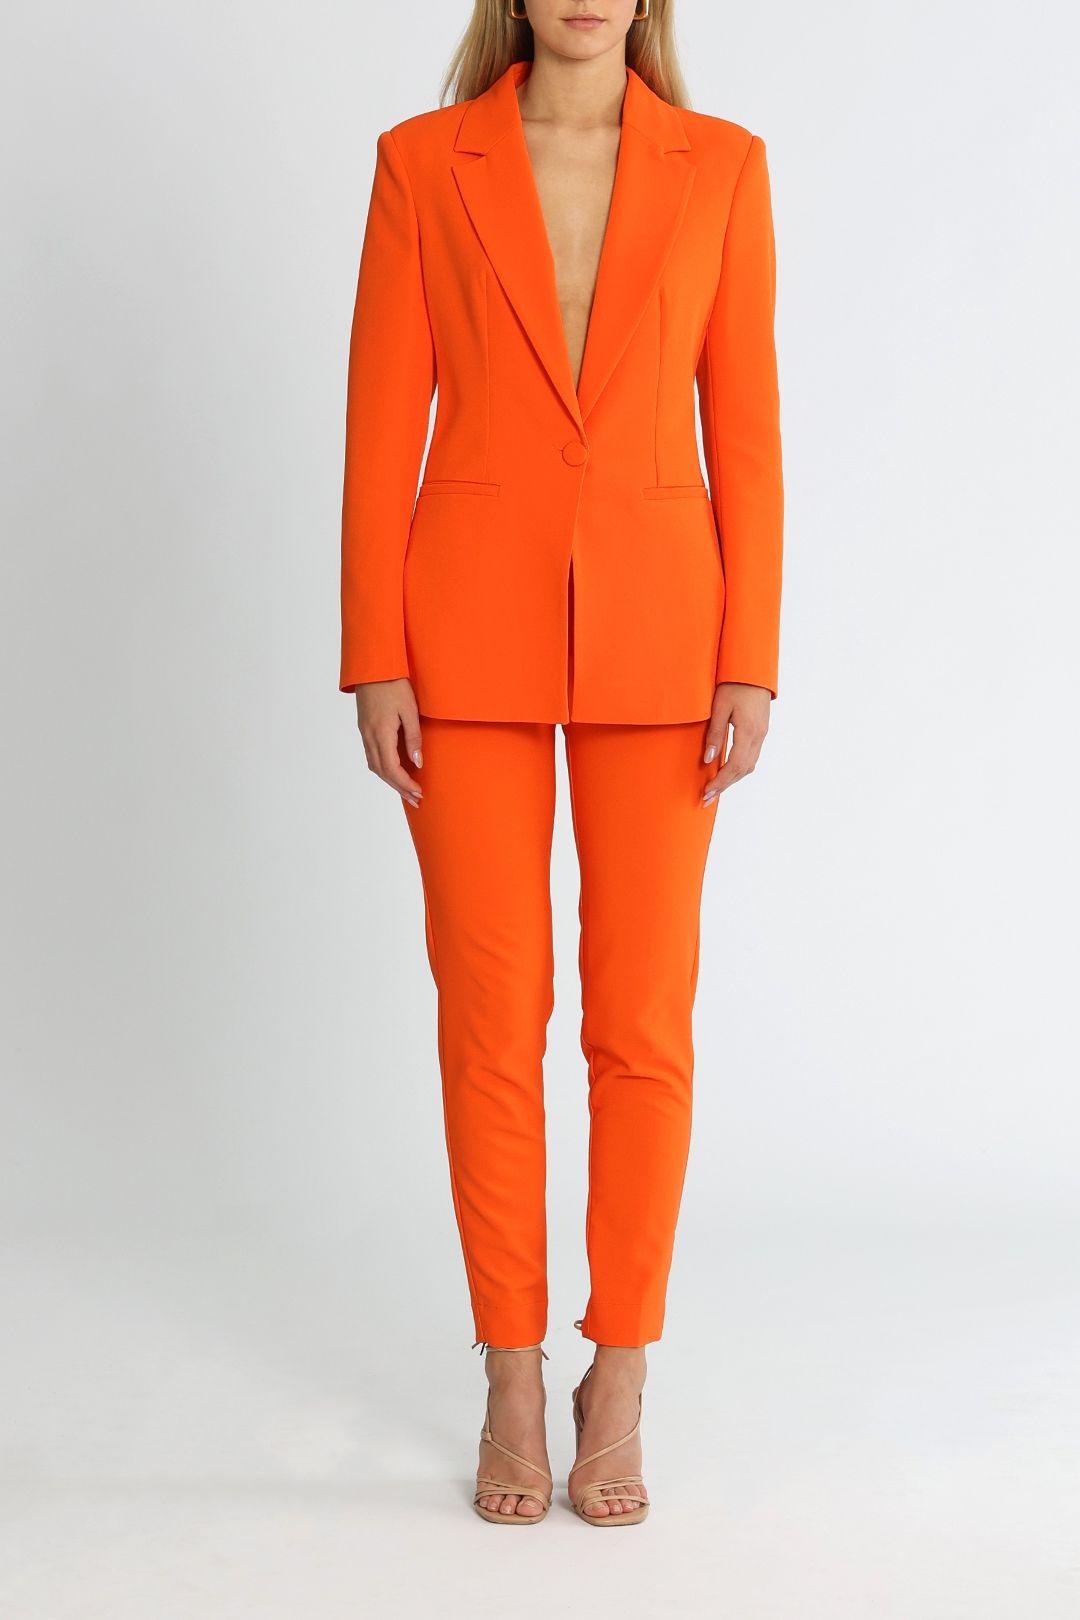 Setre Jasmine Suit Jacket and Pant Tangerine